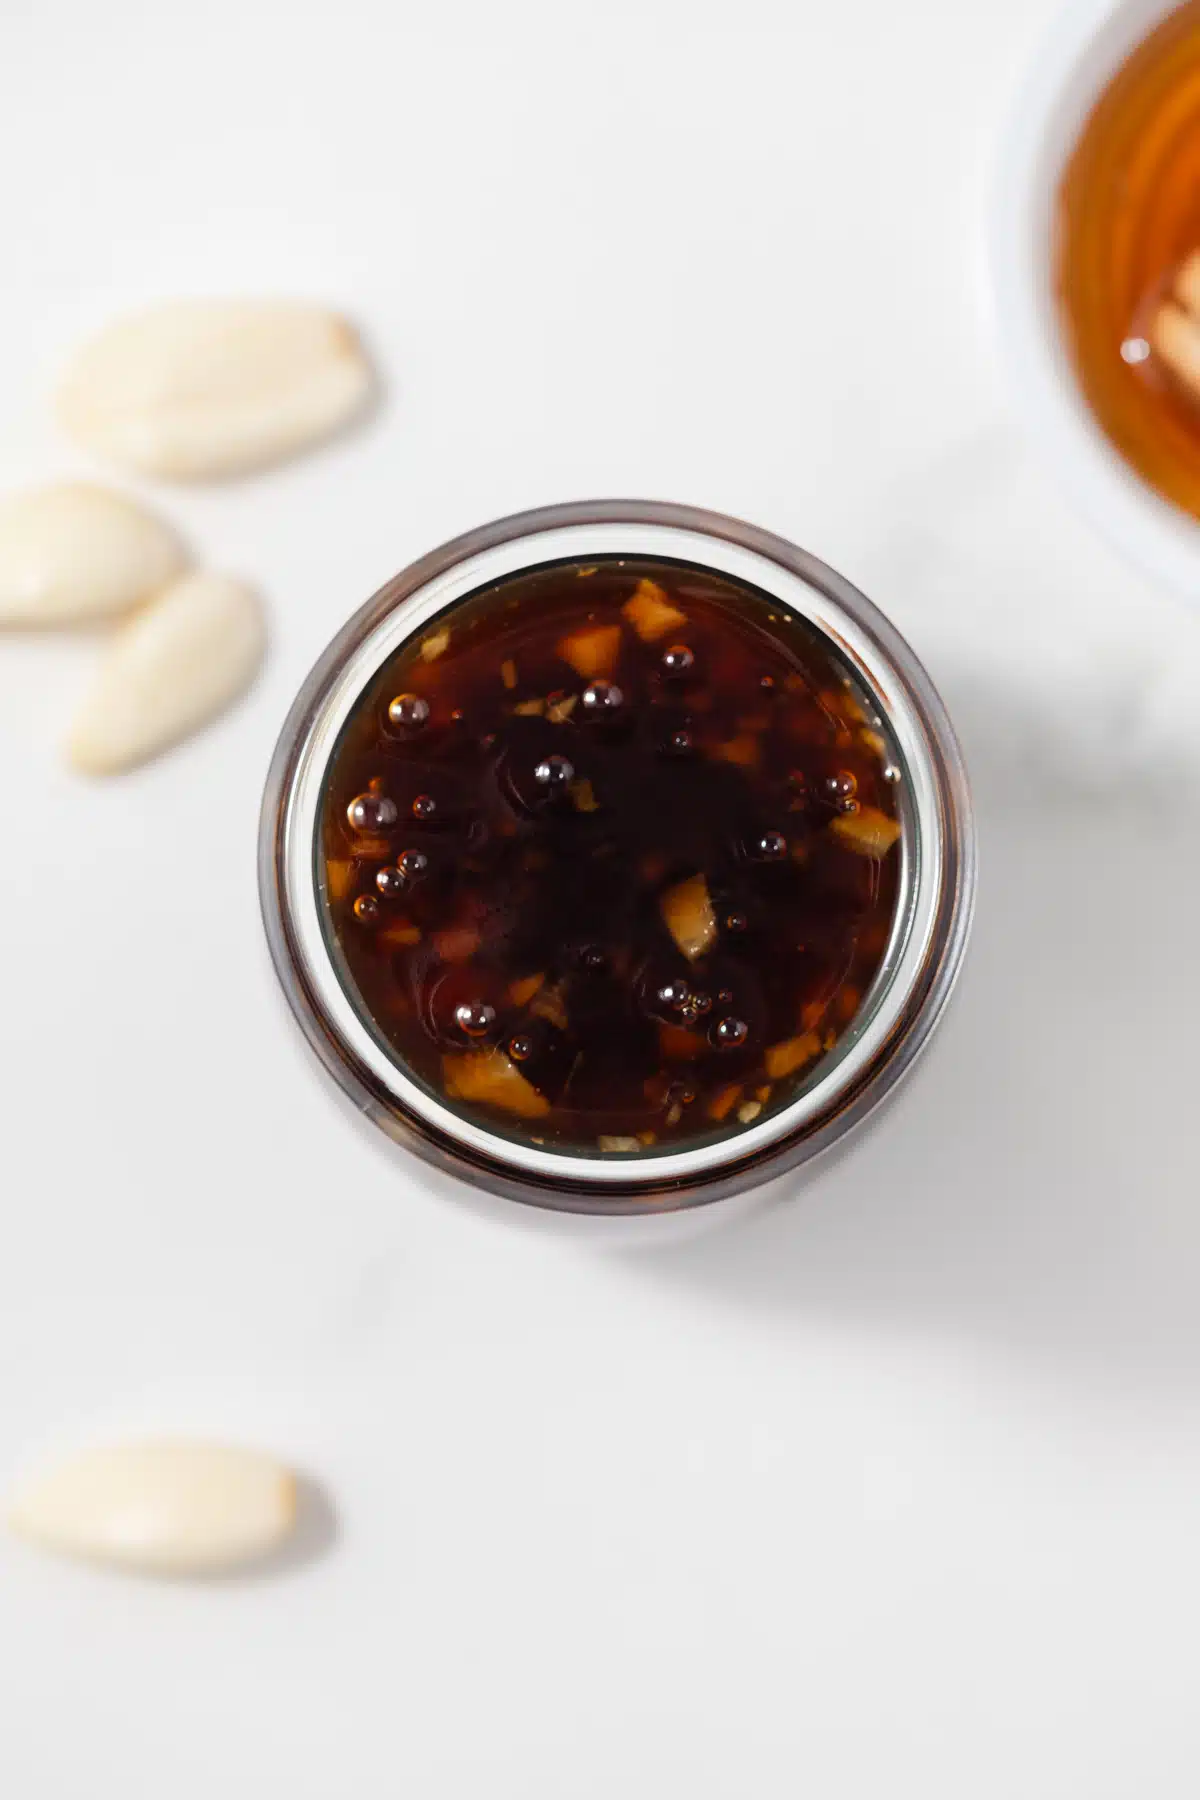 Overhead view of honey garlic sauce in glass jar.